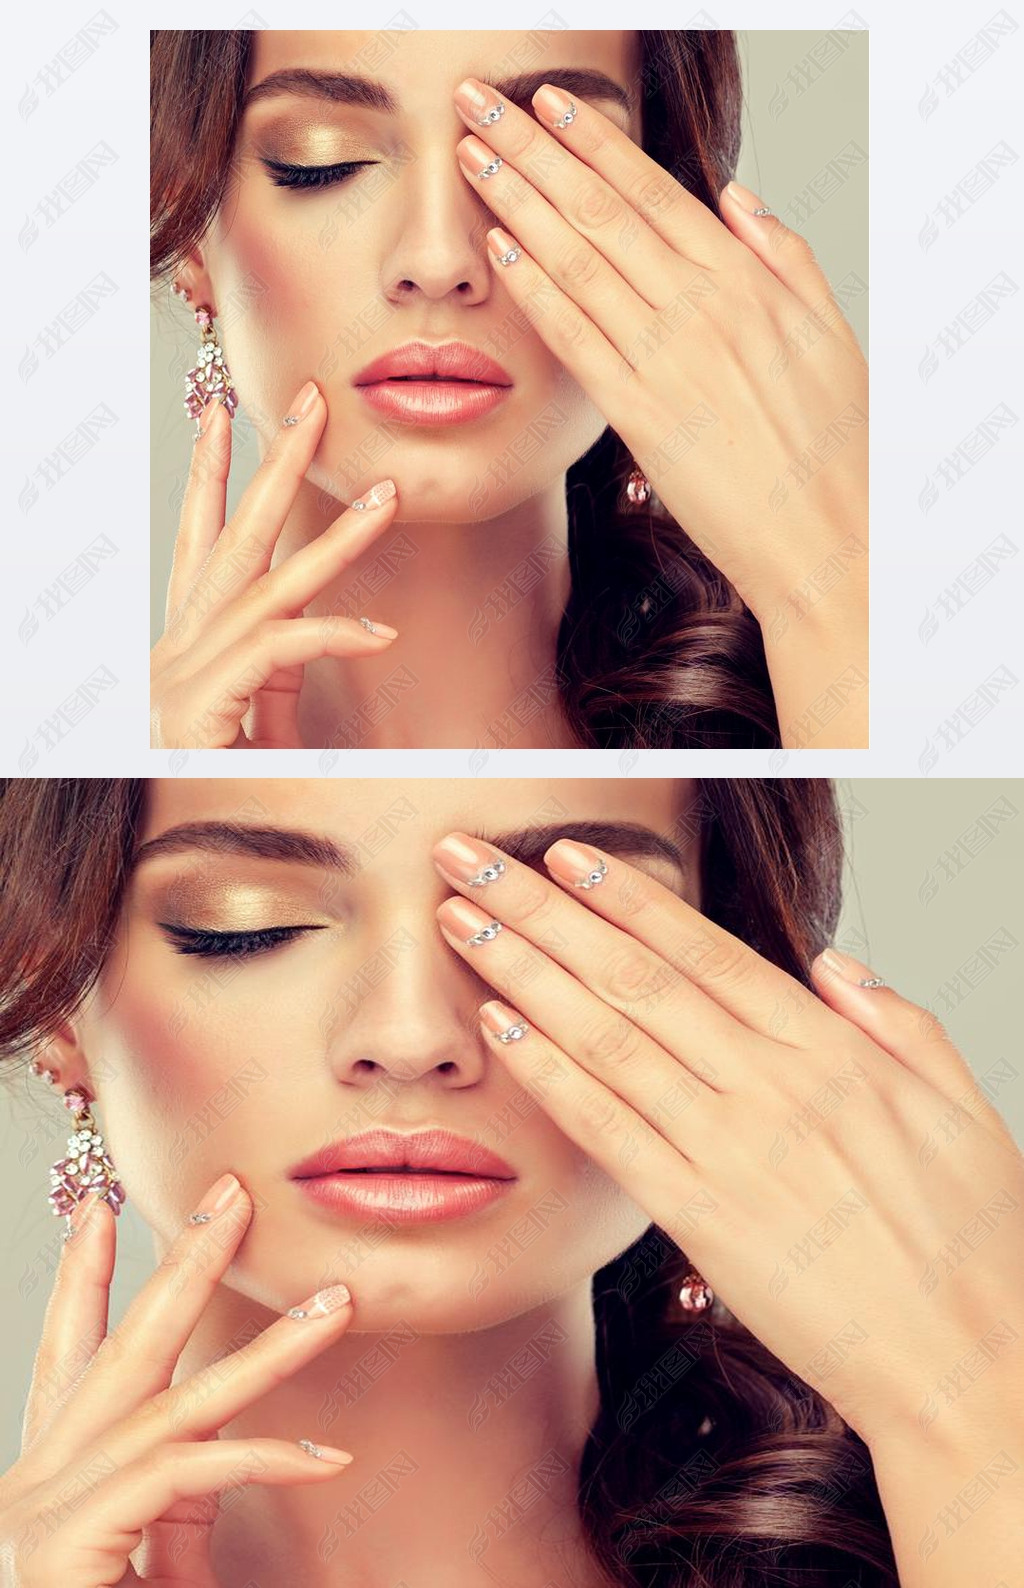 woman and stylish make up  and manicure nails